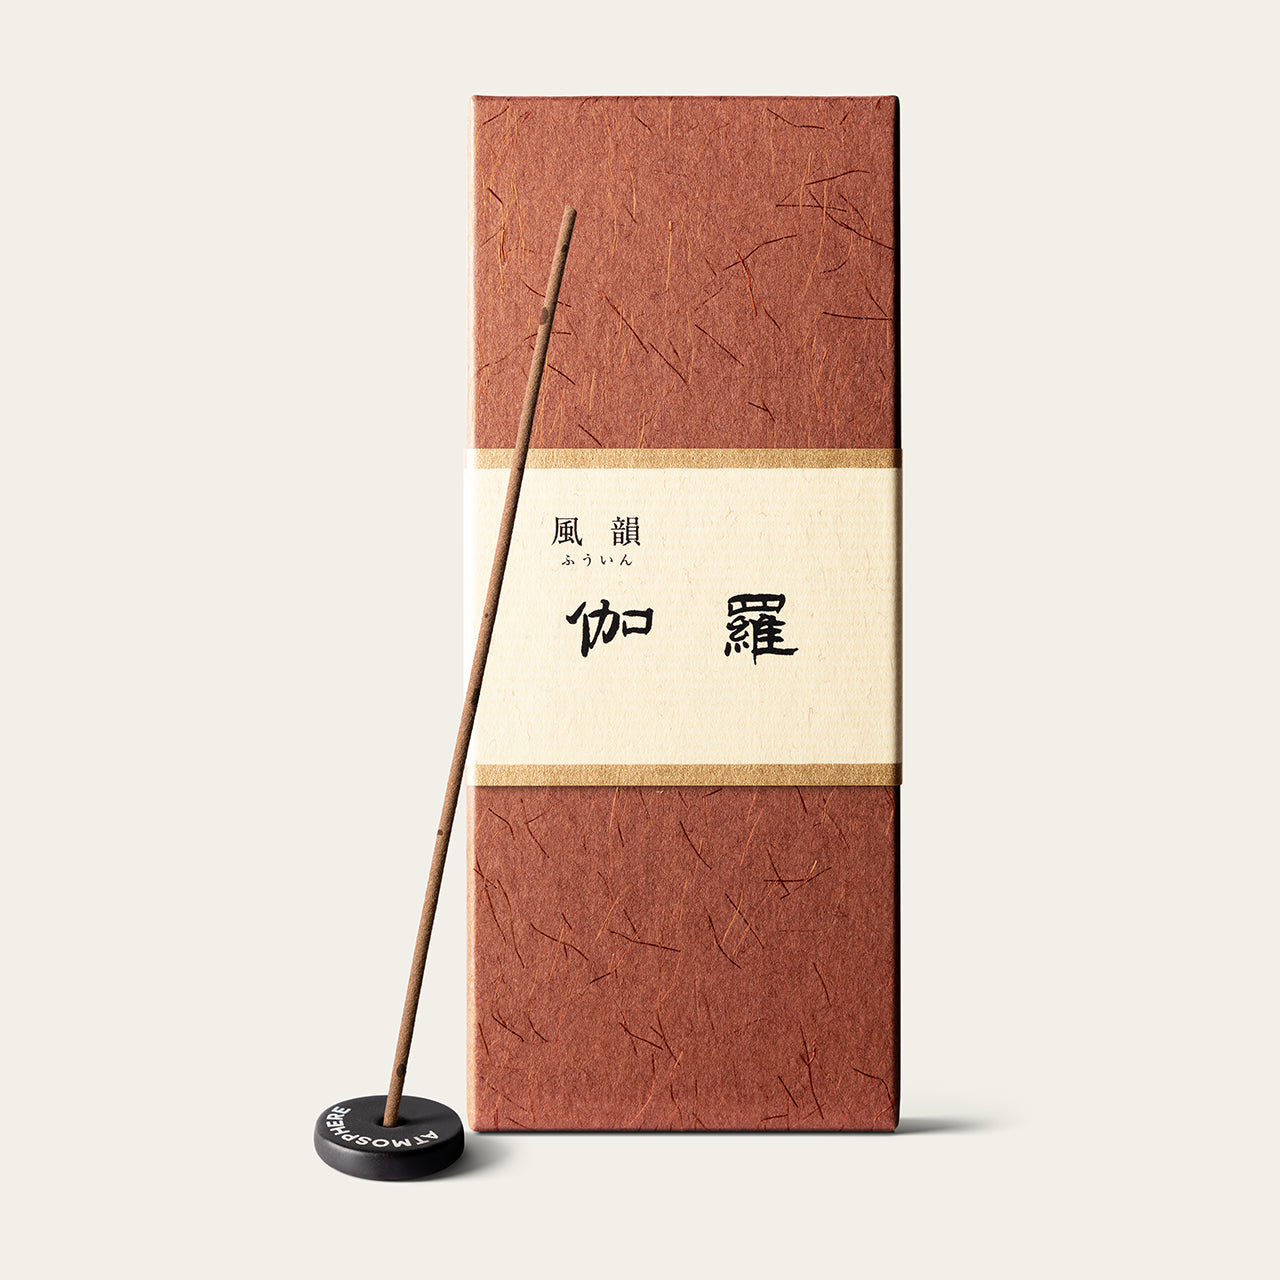 Minorien Fuin Fu-In Kyara Japanese incense sticks (40 sticks) with Atmosphere ceramic incense holder